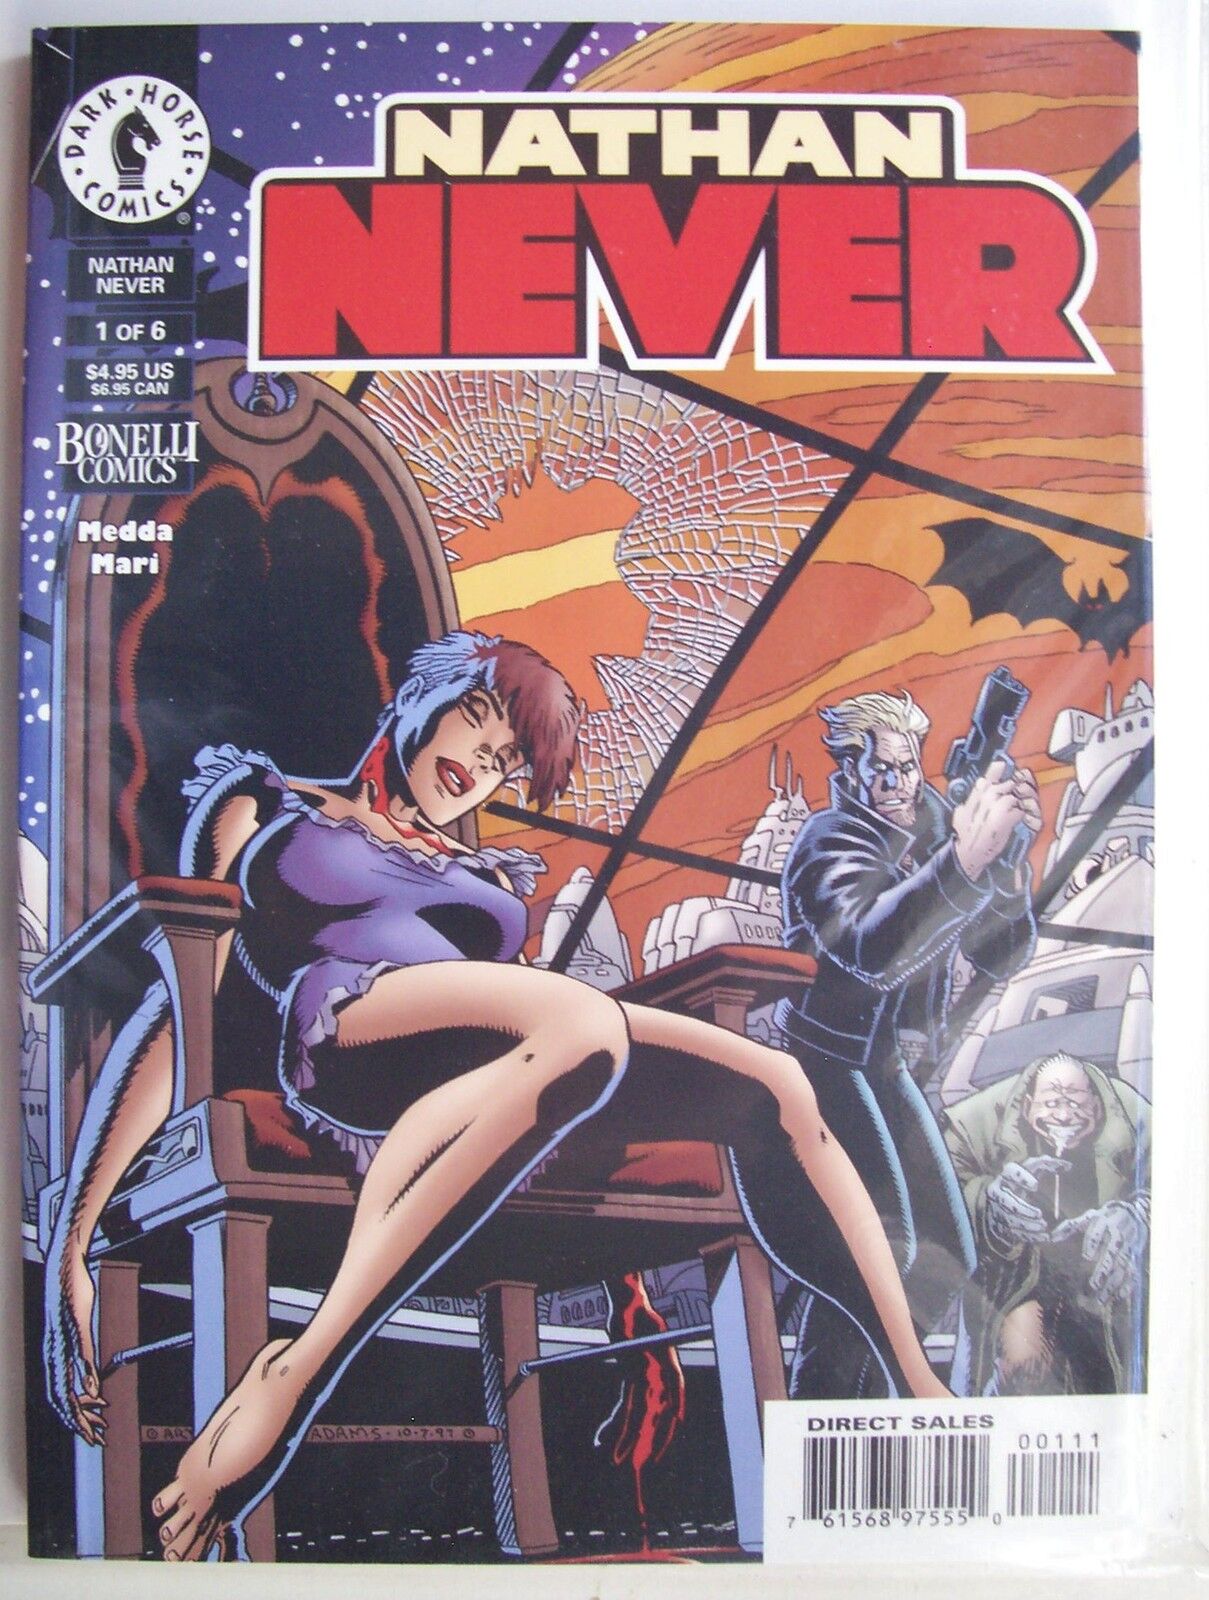 Trade Paperback 1999 Nathan Never: Volume One * Dark Horse Comics * 